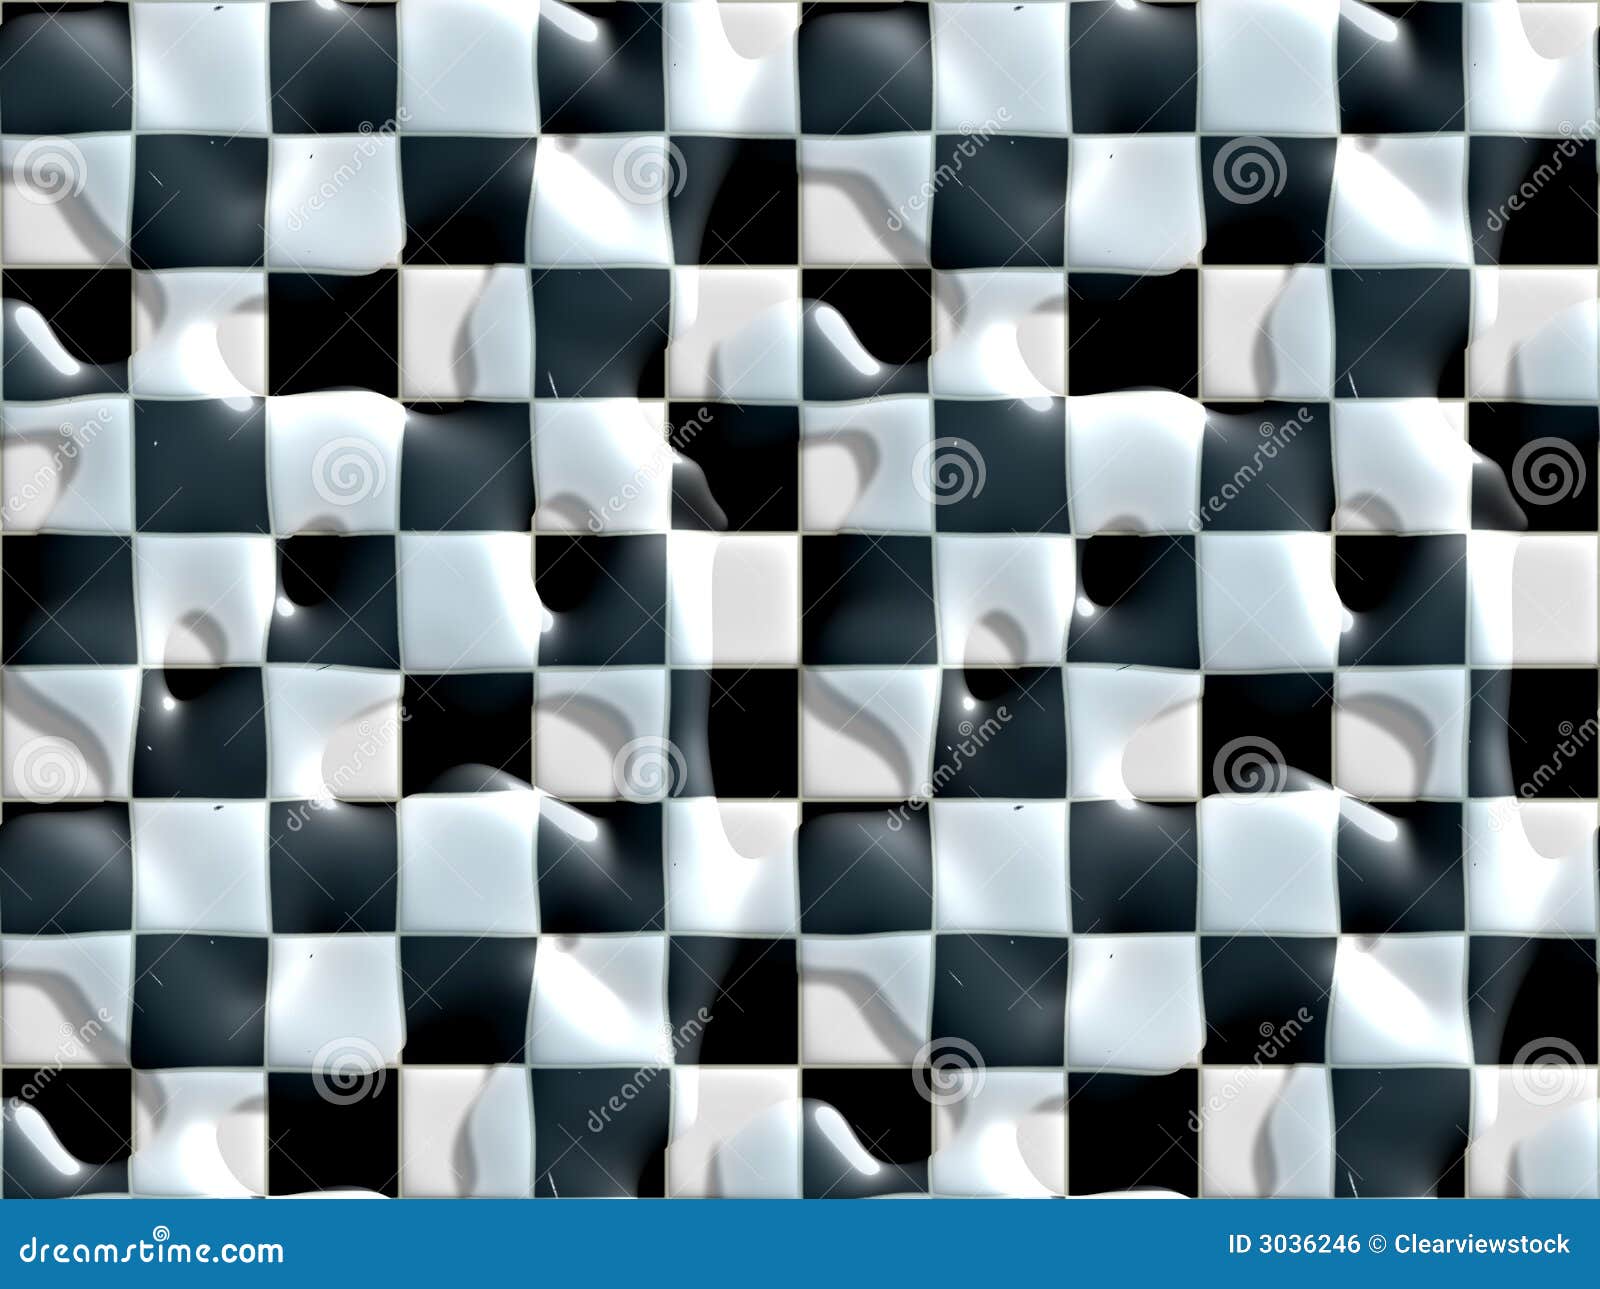 Wet Floor Black White Tiles Royalty Free Stock Image - Image: 3036246